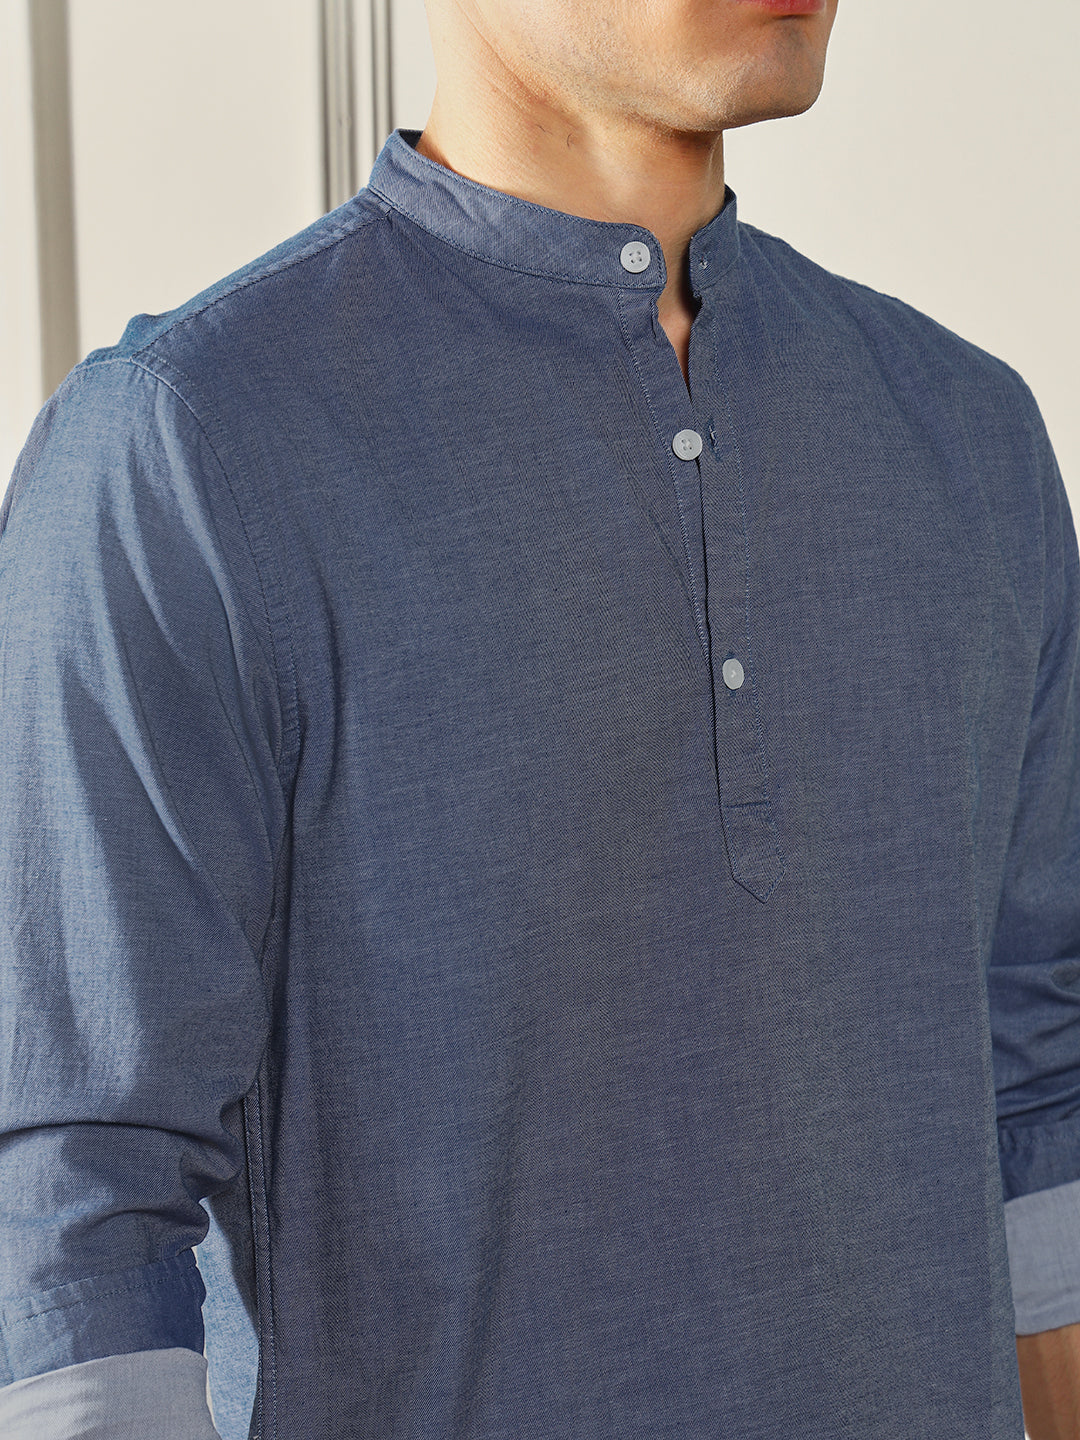 Dennis Lingo Men's Blue Solid Mandarin collar Cotton Shirt